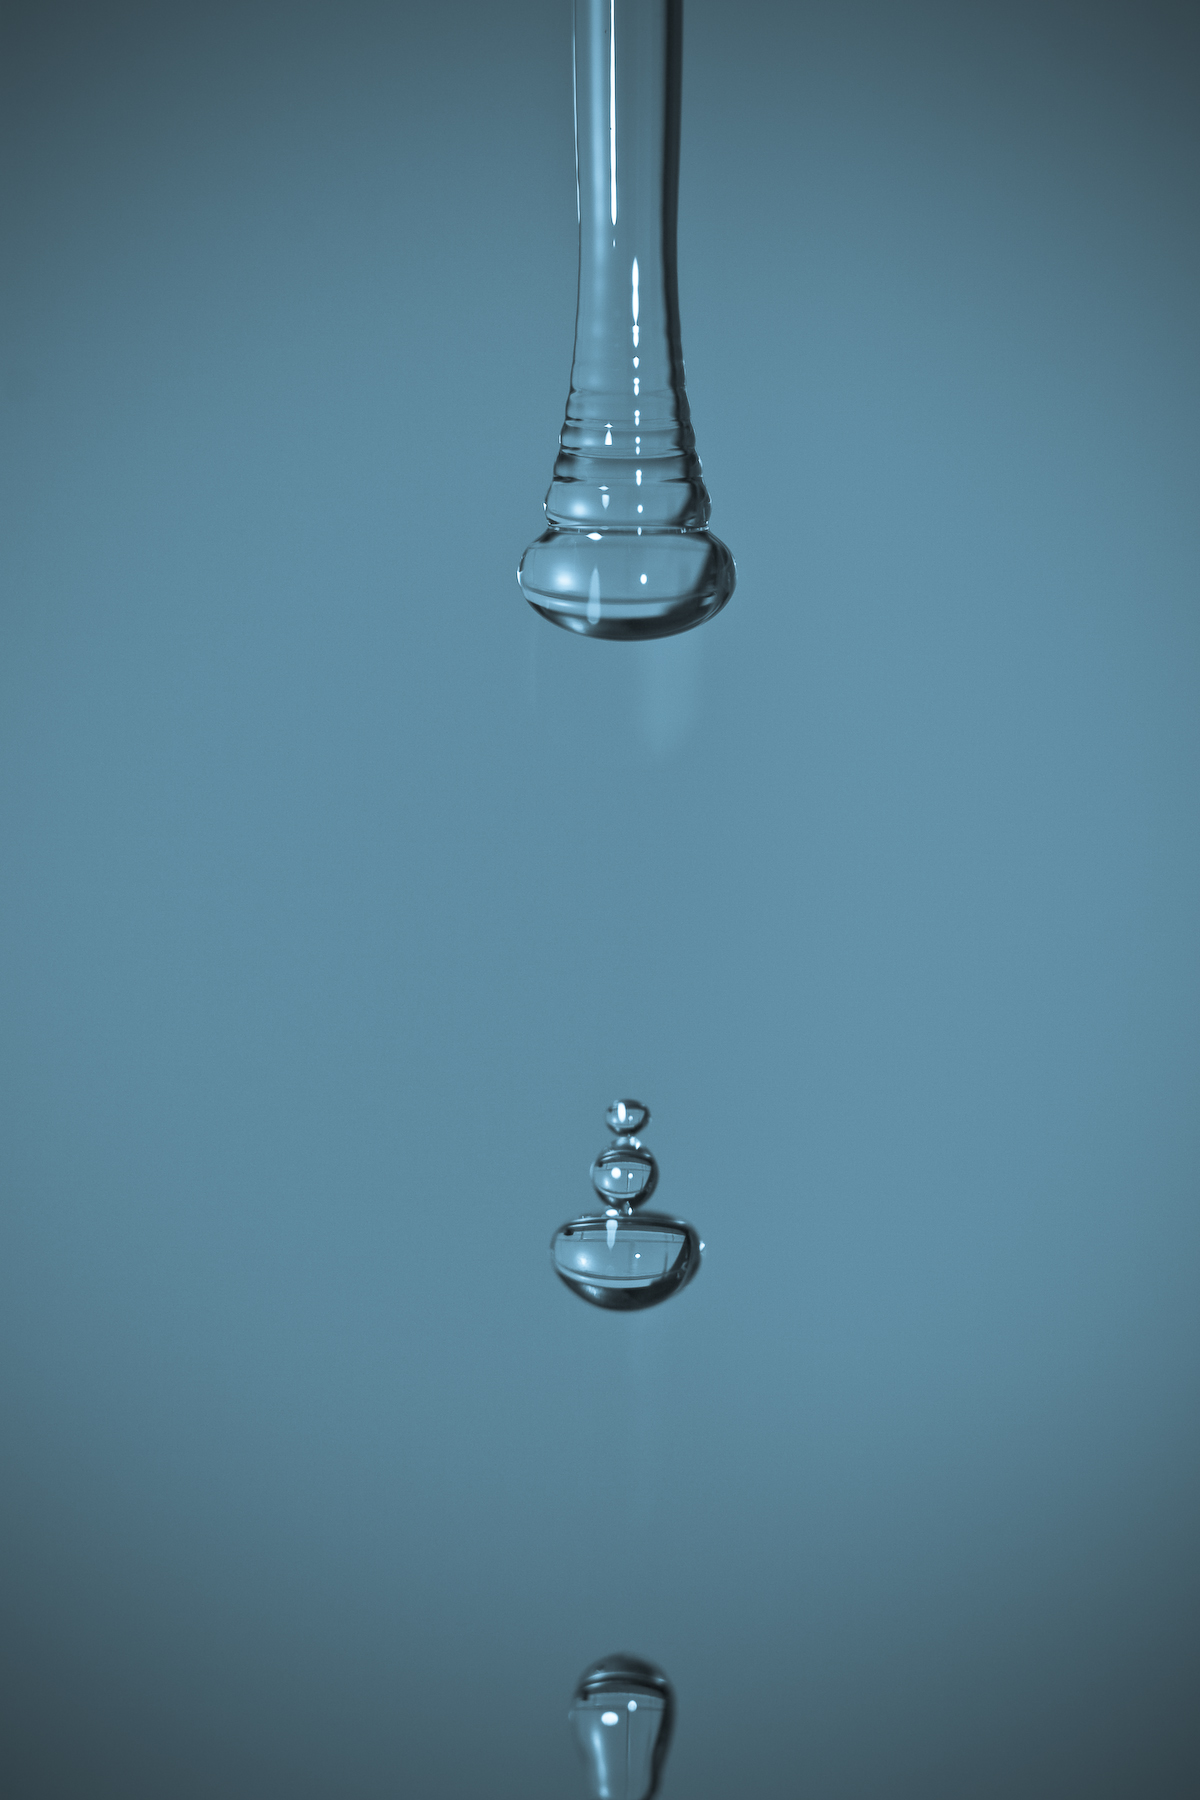 A drop of water, Abstract, Aqua, Blue, Calm, HQ Photo